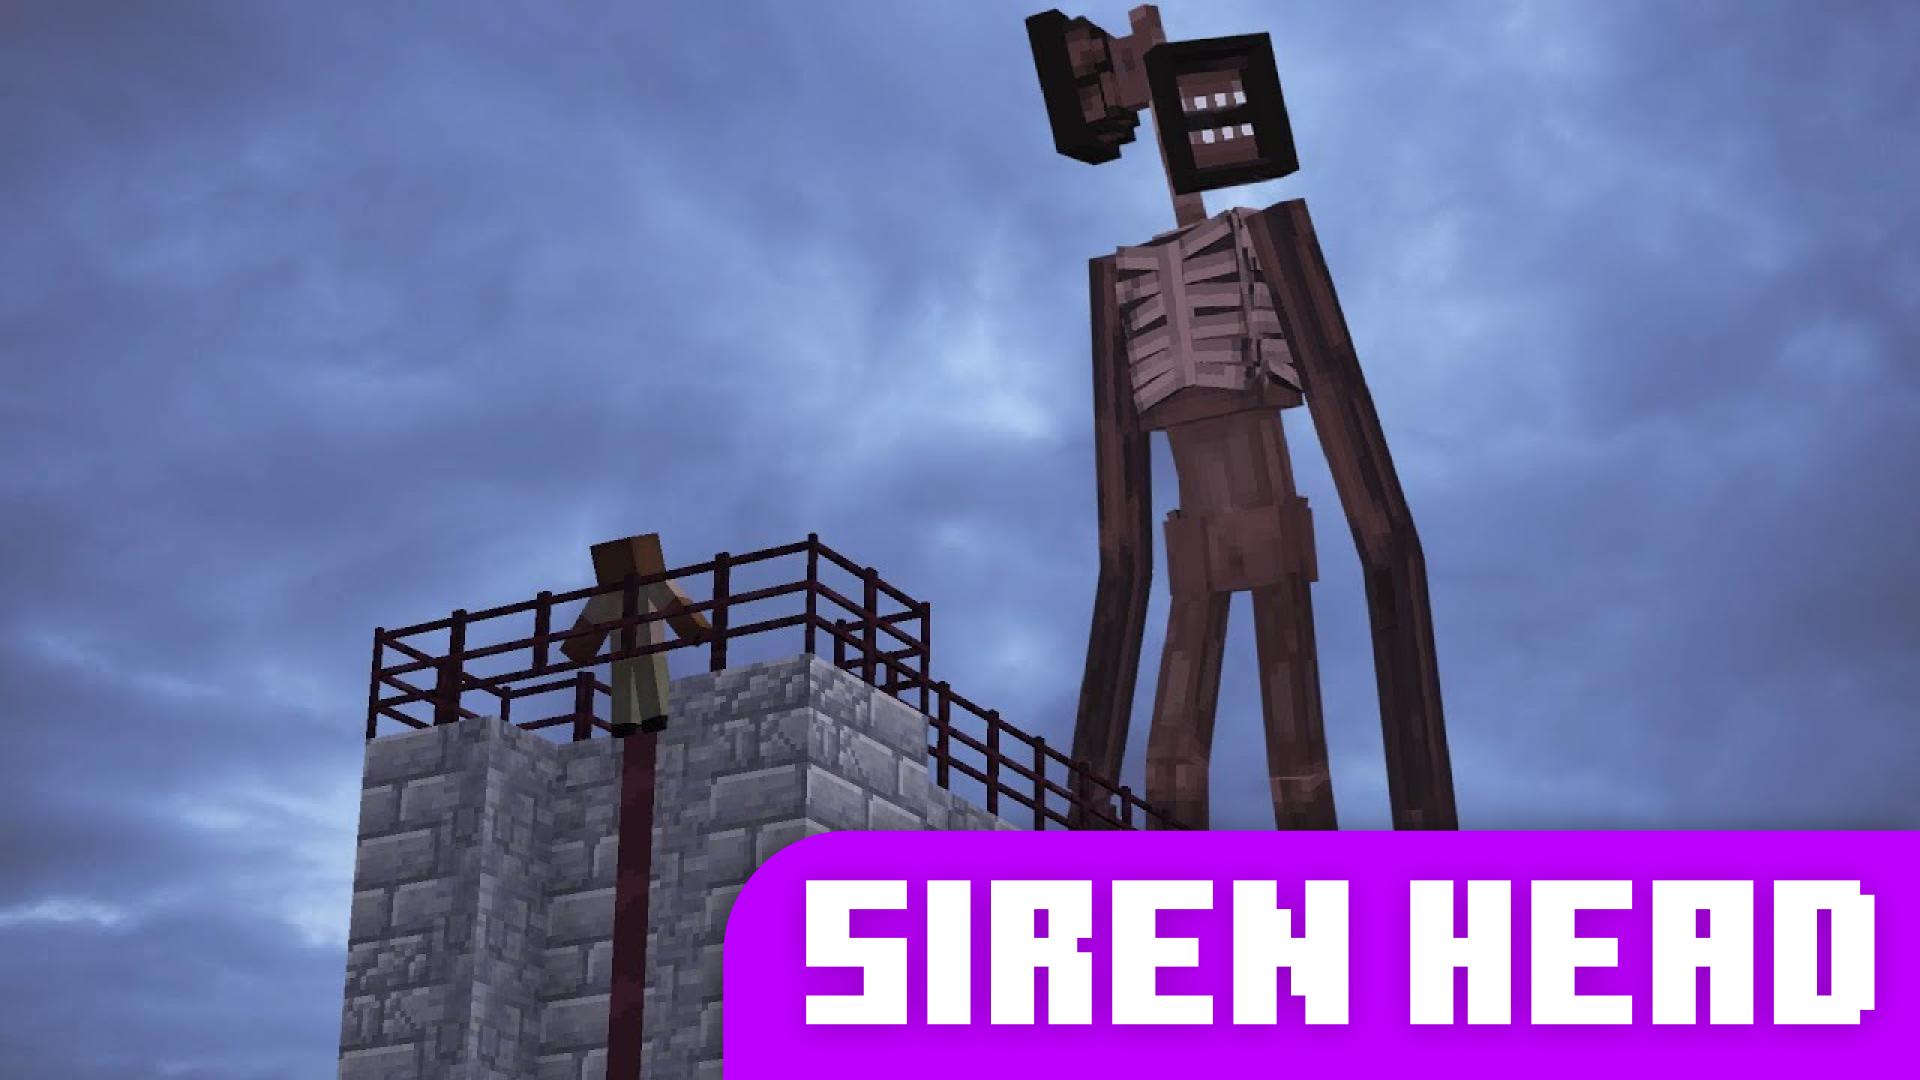 Siren head existe